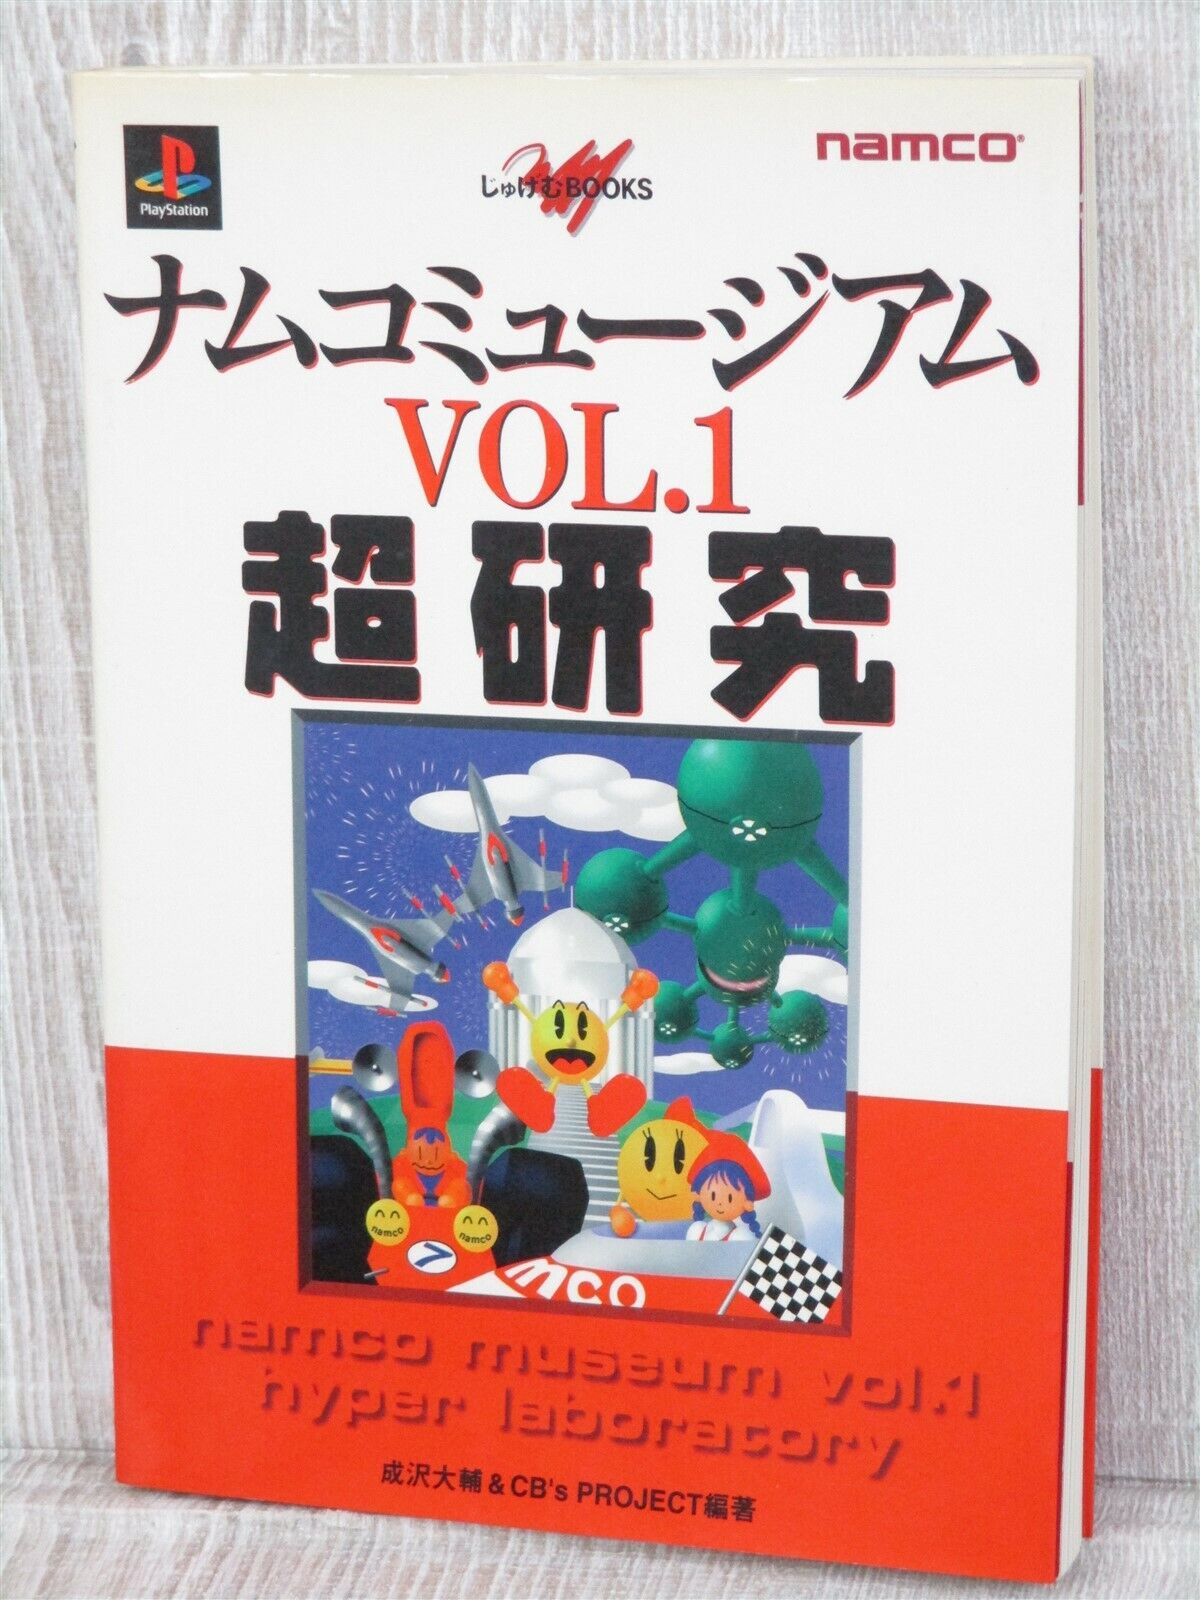 NAMCO MUSEUM Vol. 1 Cho Kenkyu Guide Cheat PS1 Pacman Galaga 1996 Book MF88